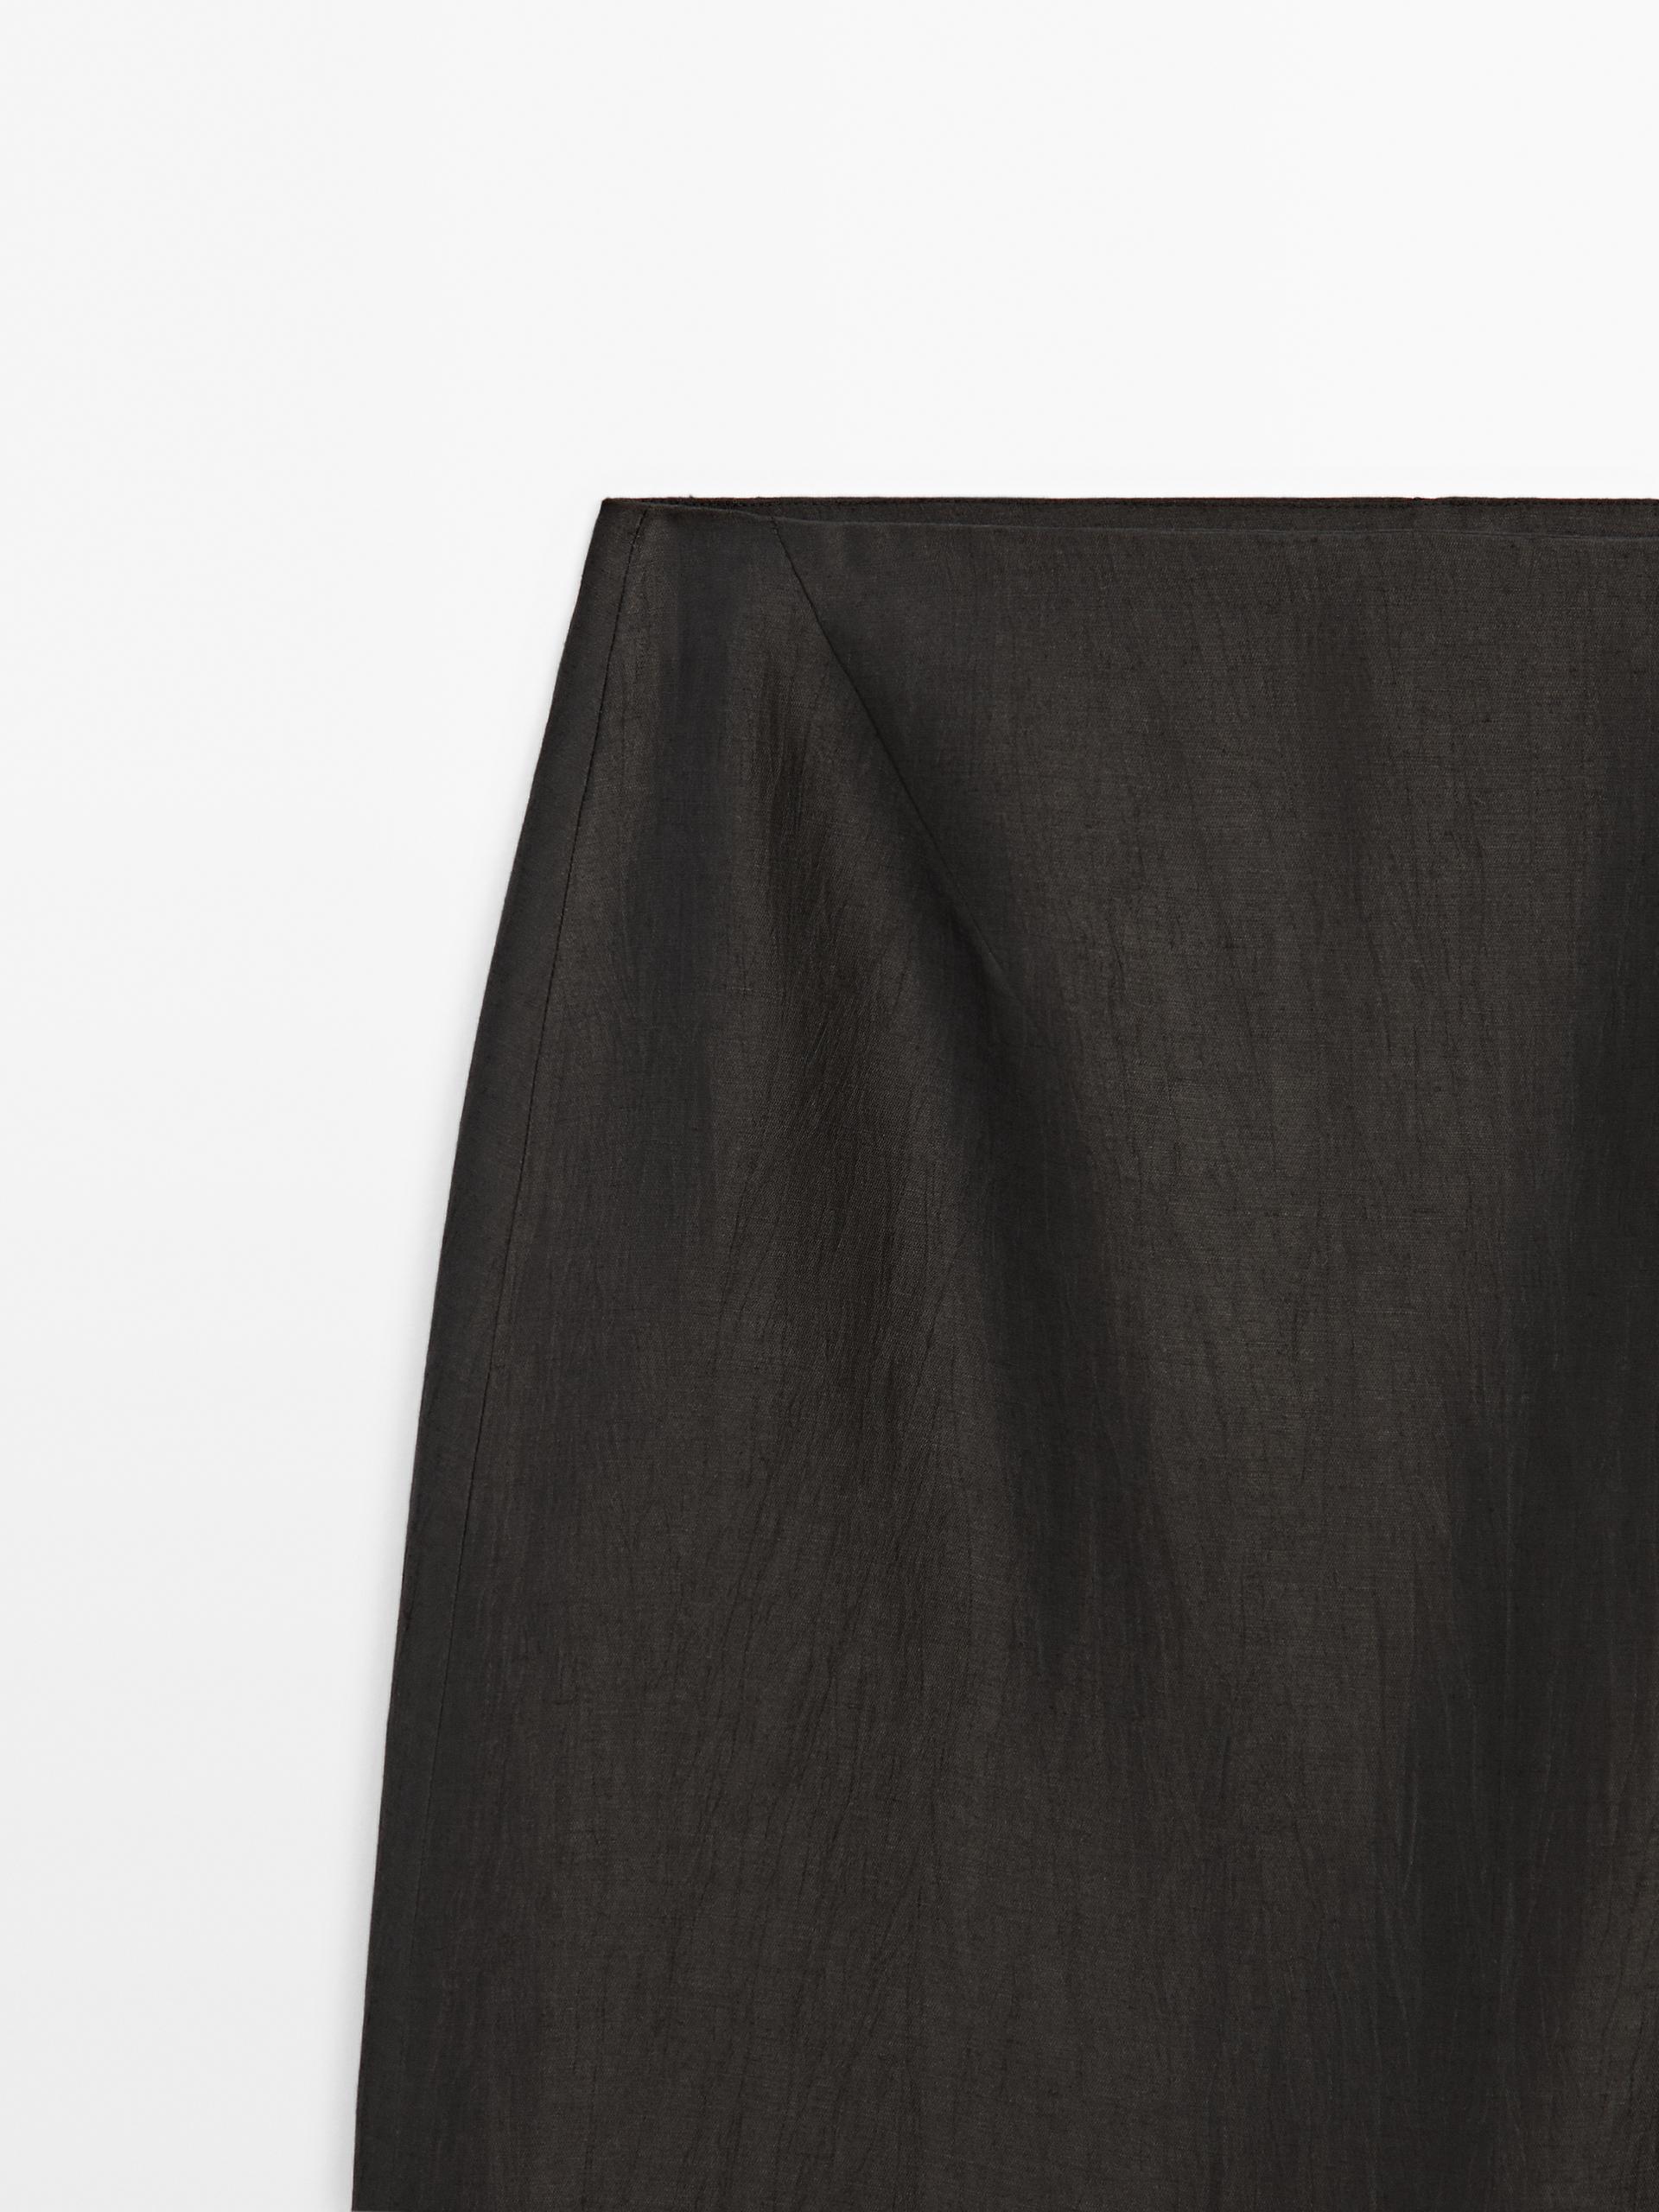 CLEARANCE!! NEW $119 TALBOTS Black Cotton Faille A-Line Skirt Sz 2